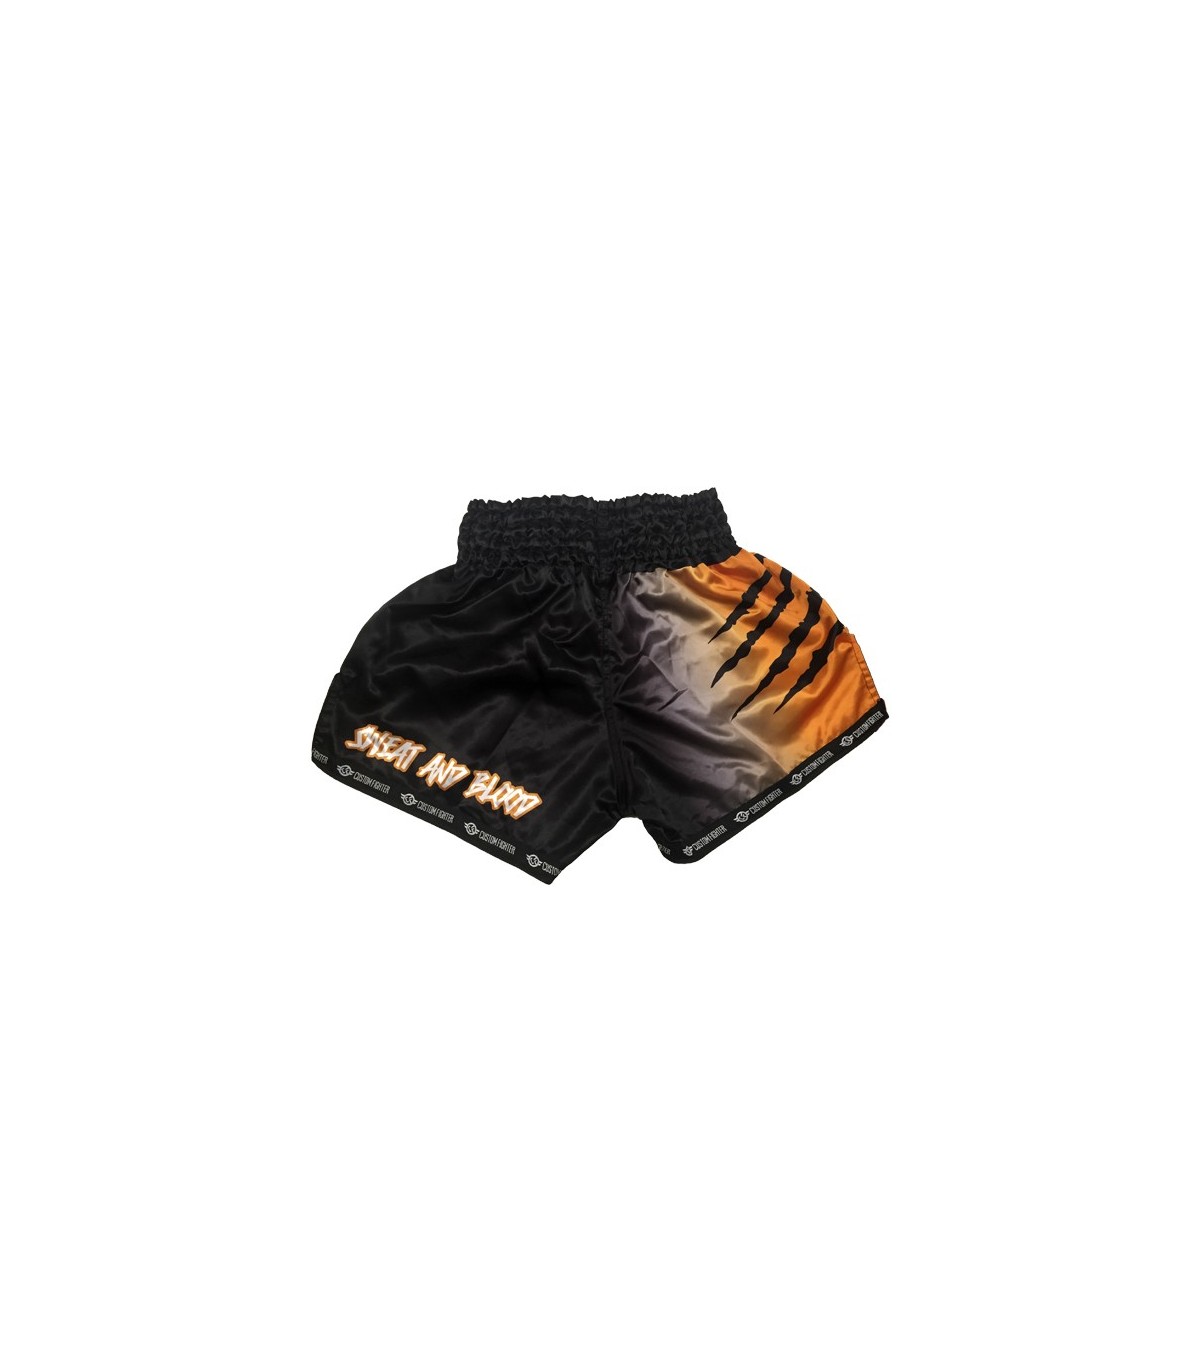 Pantalones cortos PUGILIST P1 tiger muay thai, shorts deportivos